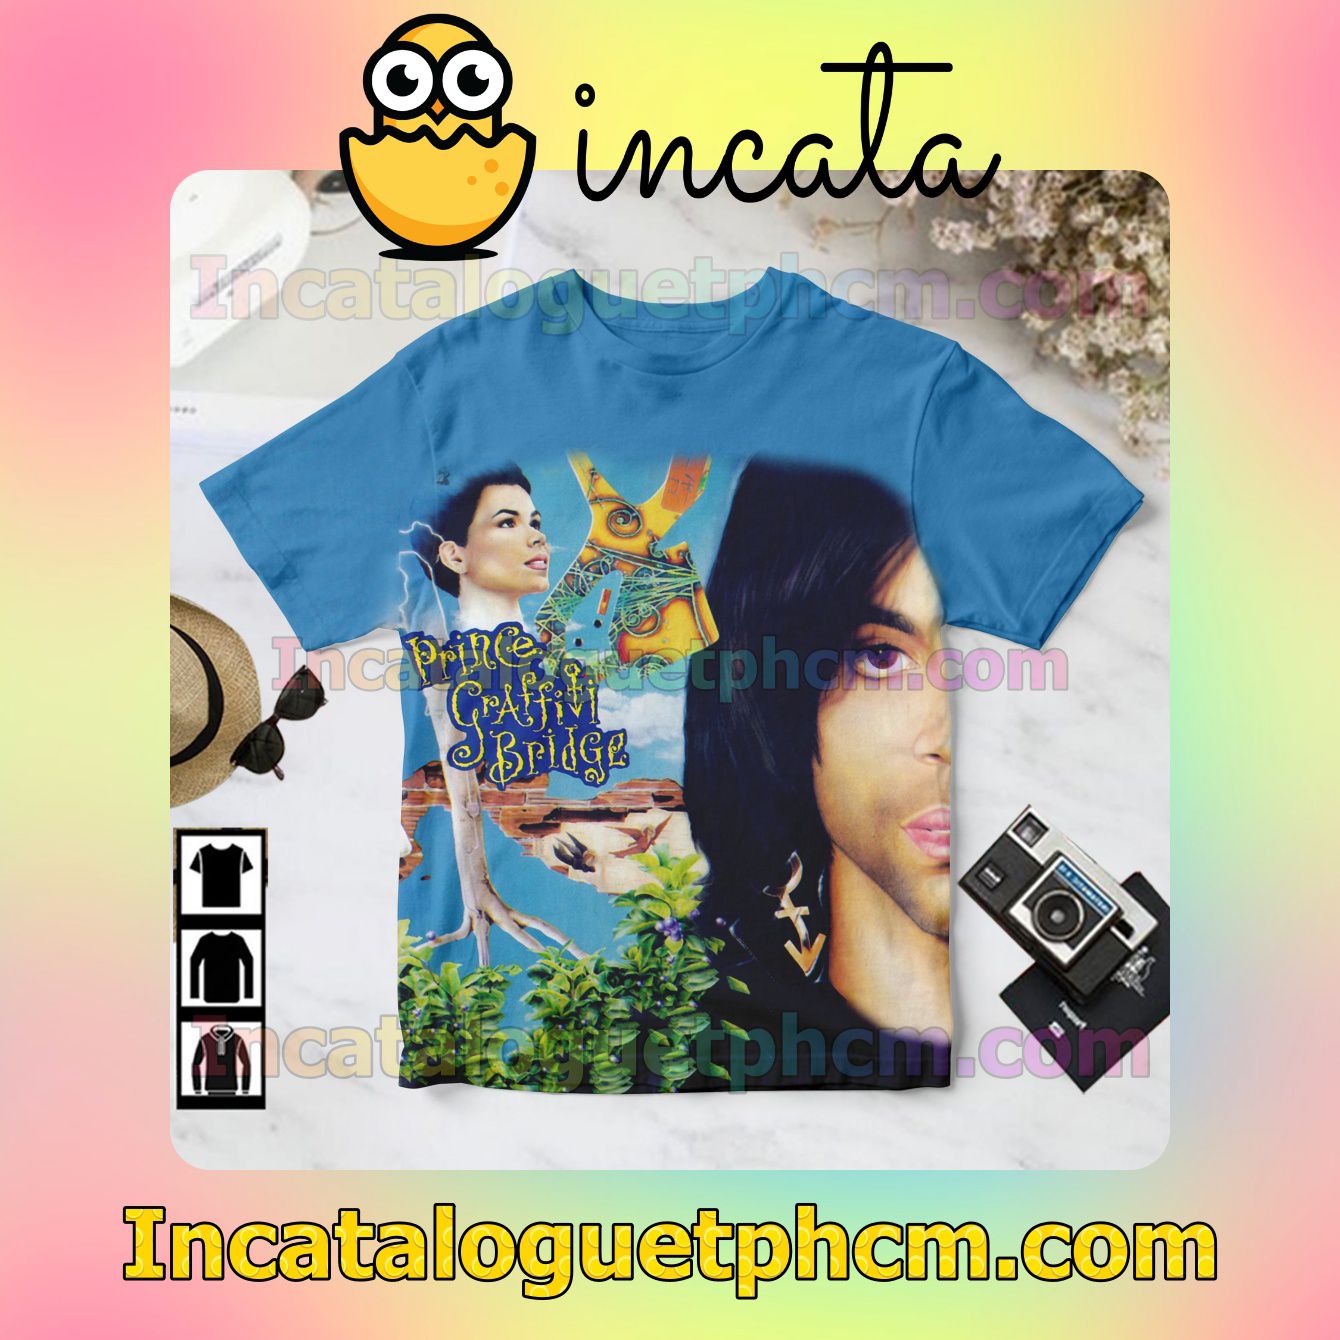 Prince Graffiti Bridge Album Cover Blue Gift Shirt